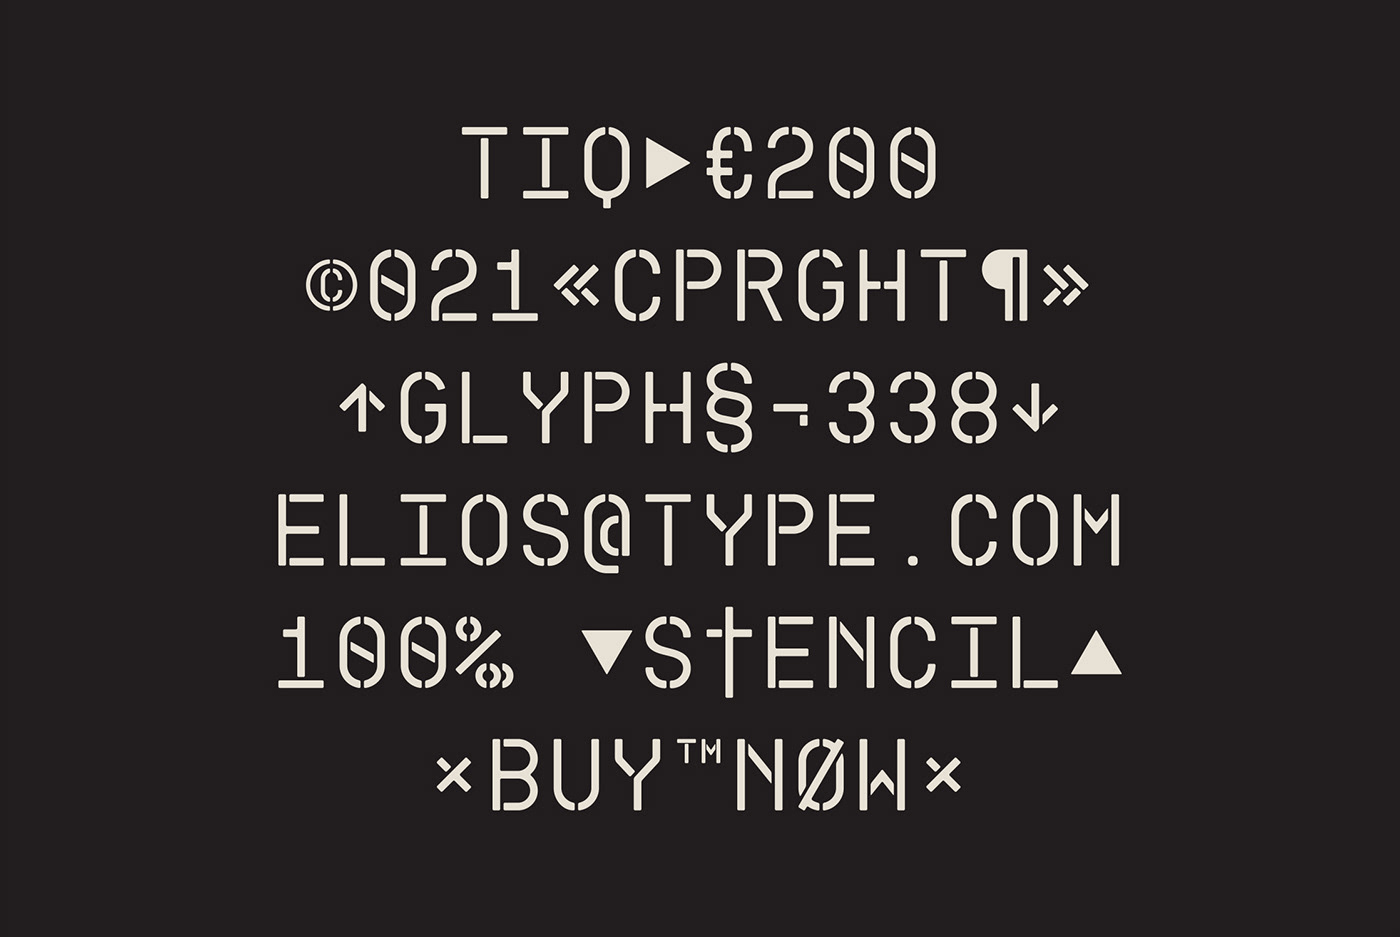 atk studio display font elios elios font elios mono elios stencil monospaced radinalriki stencil stencil font